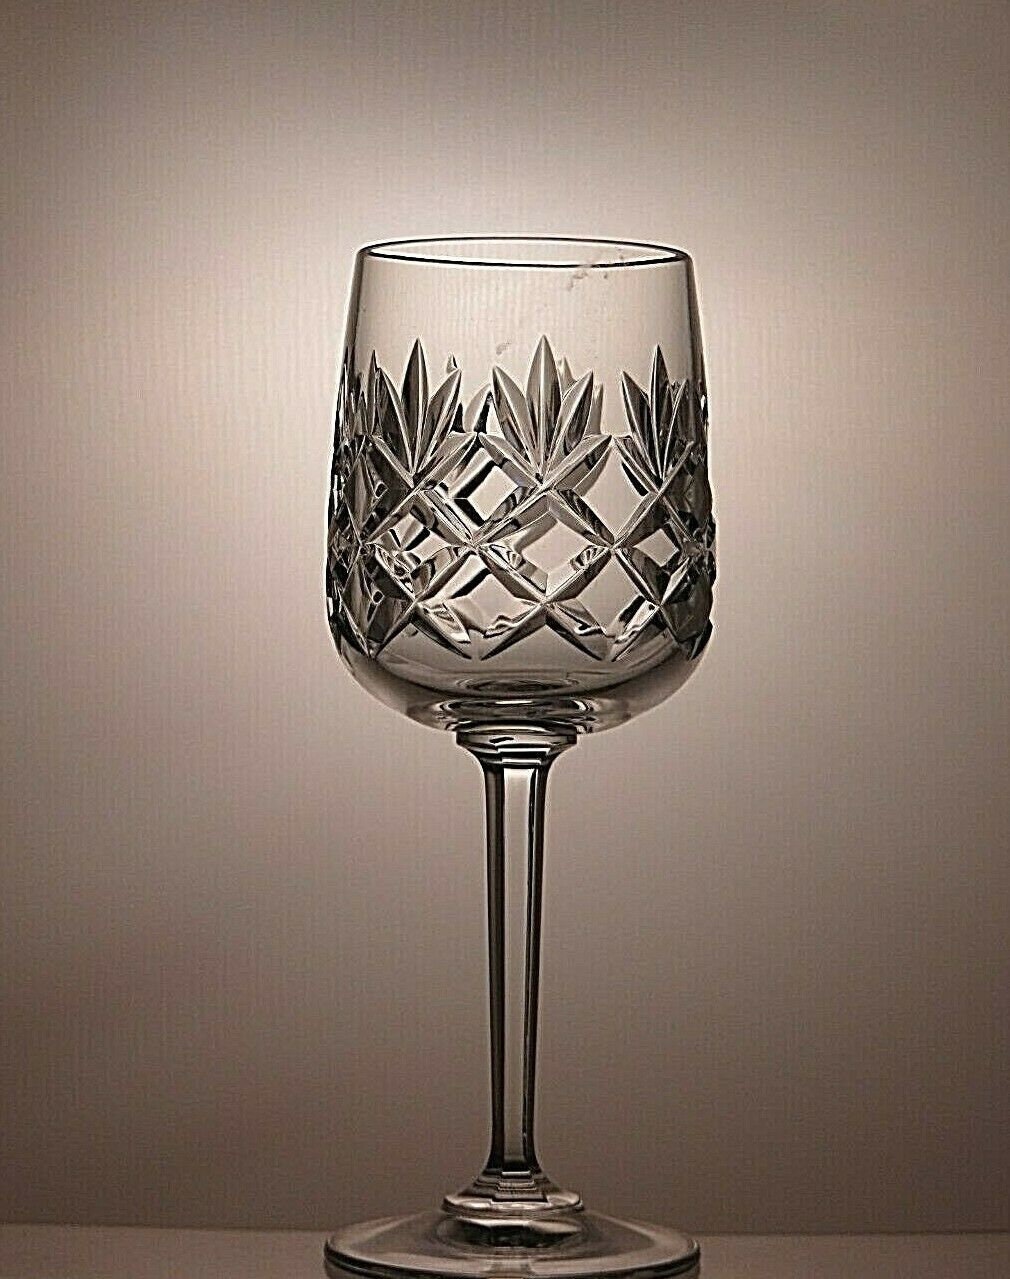 Set of 6 Bohemia Crystal Wine Glasses: 640ml Barbara